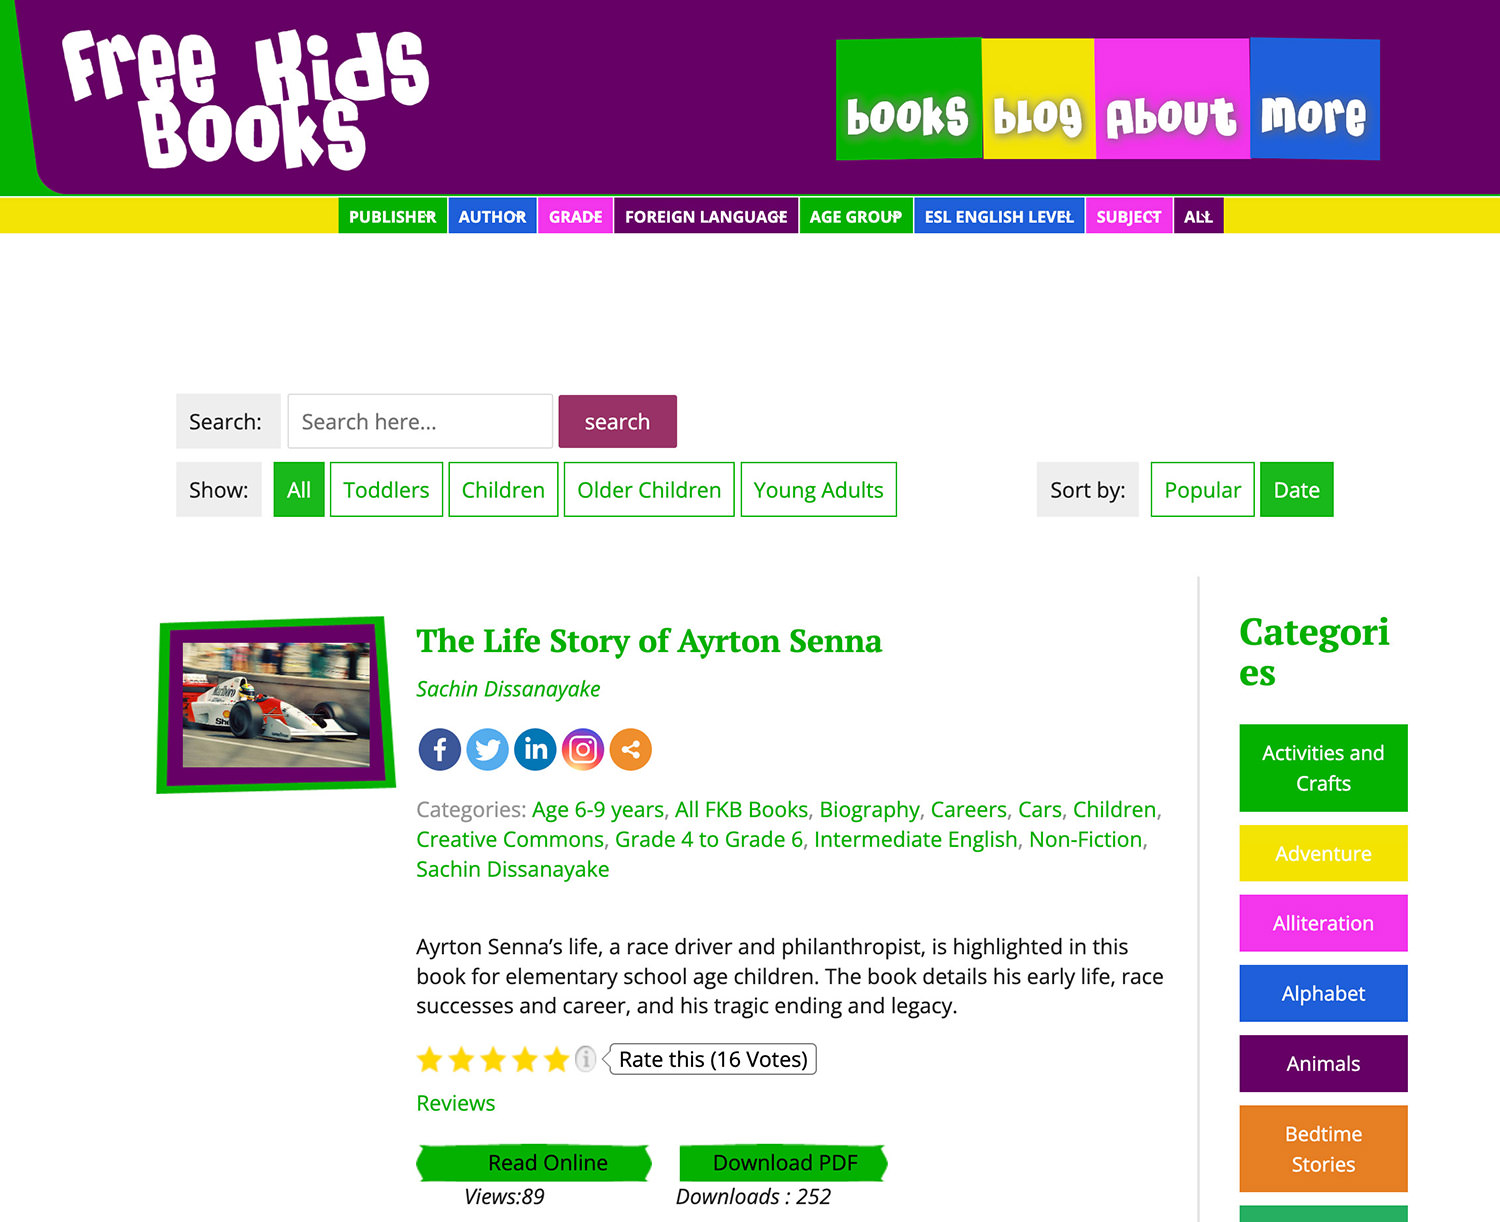 Image of Free Kids Books website